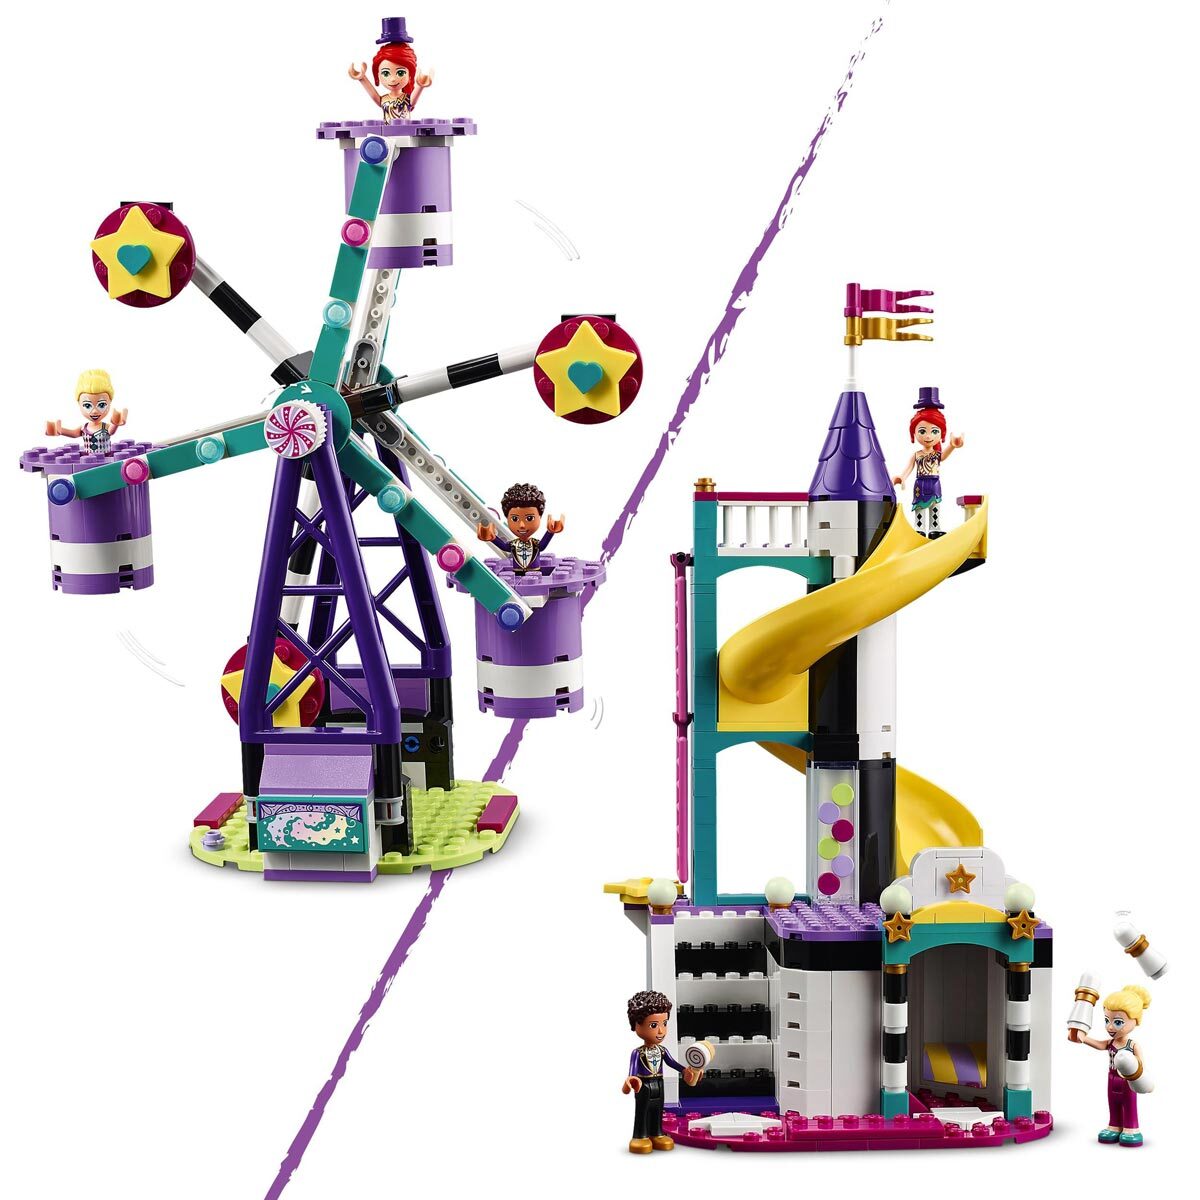 Buy LEGO Friends Magical Ferris Wheel & Slide Close up Image at costco.co.uk